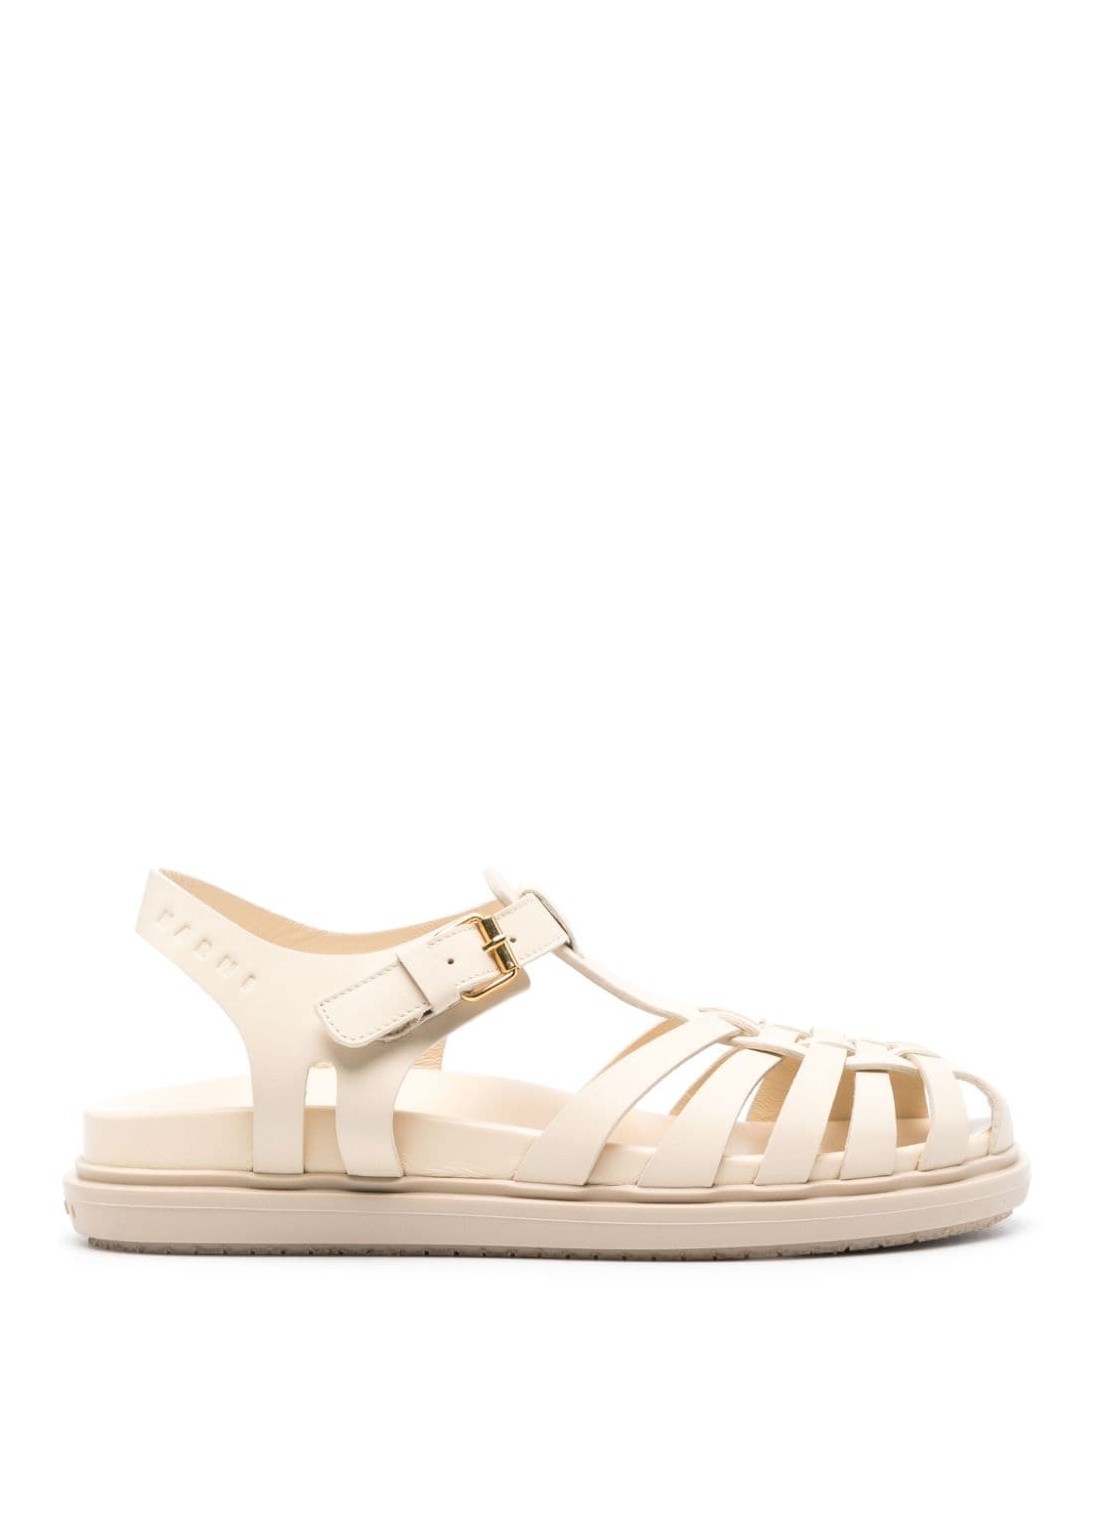 Sandalia marni sandal woman sandal sams016901 00w11 talla blanco
 